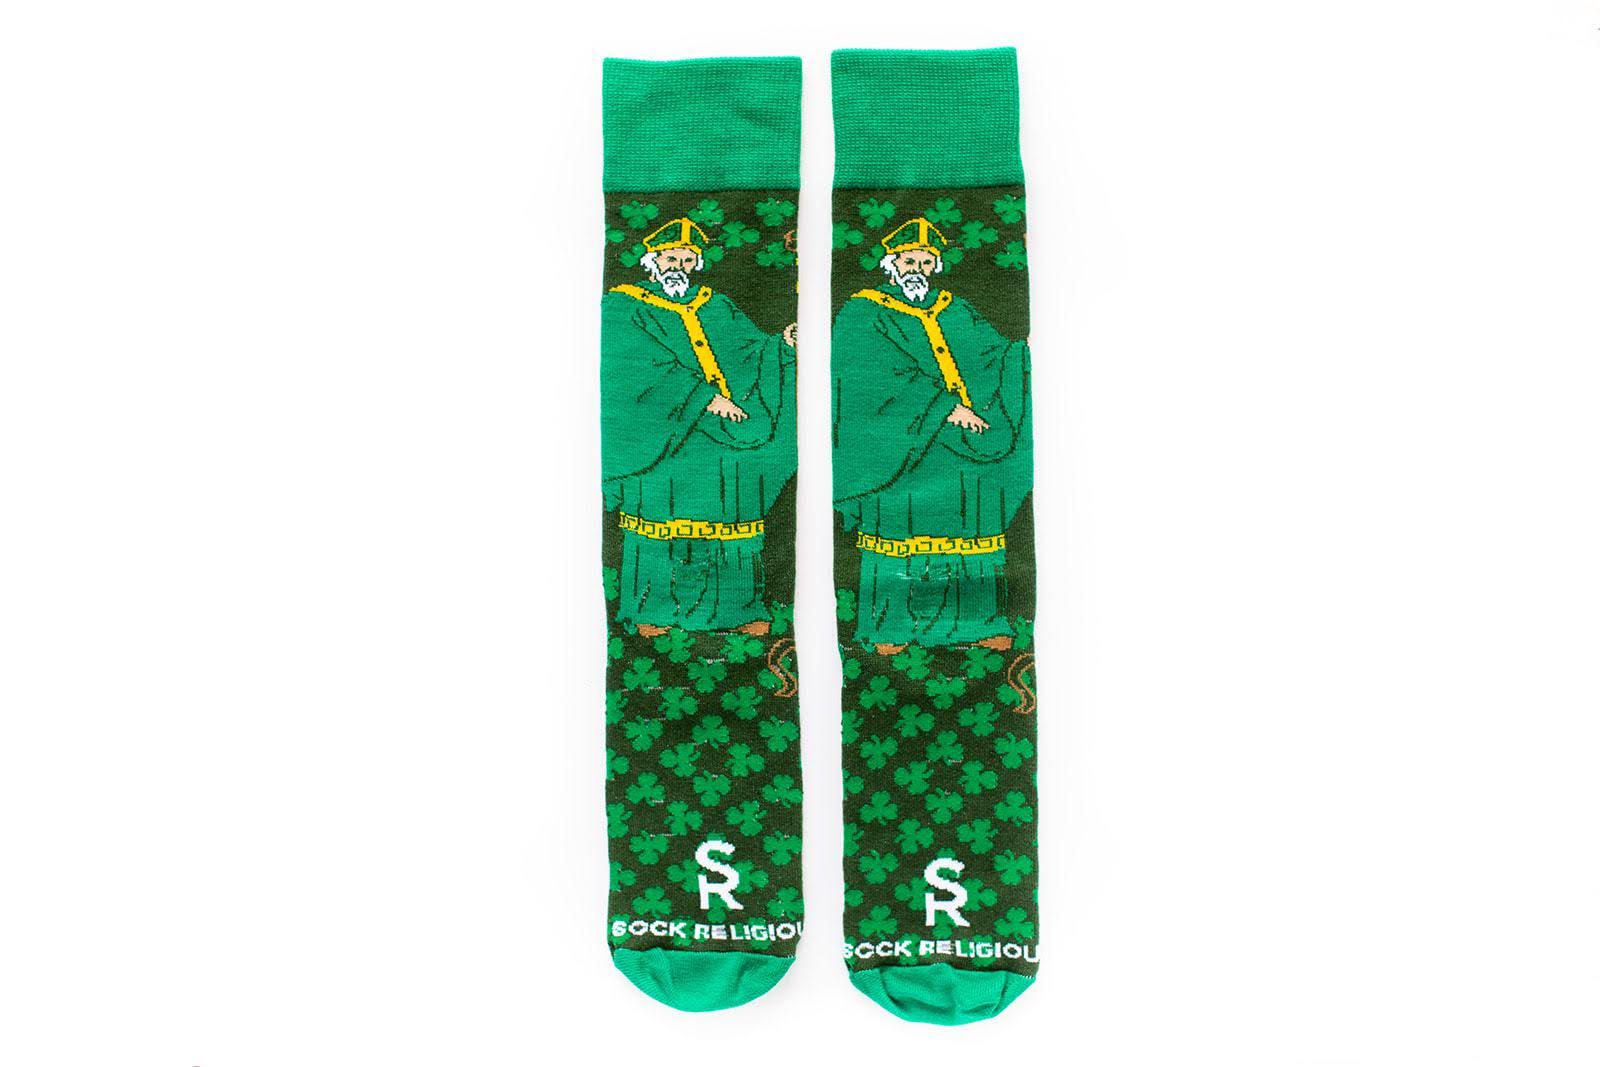 St. Patrick Socks - Sock Religious